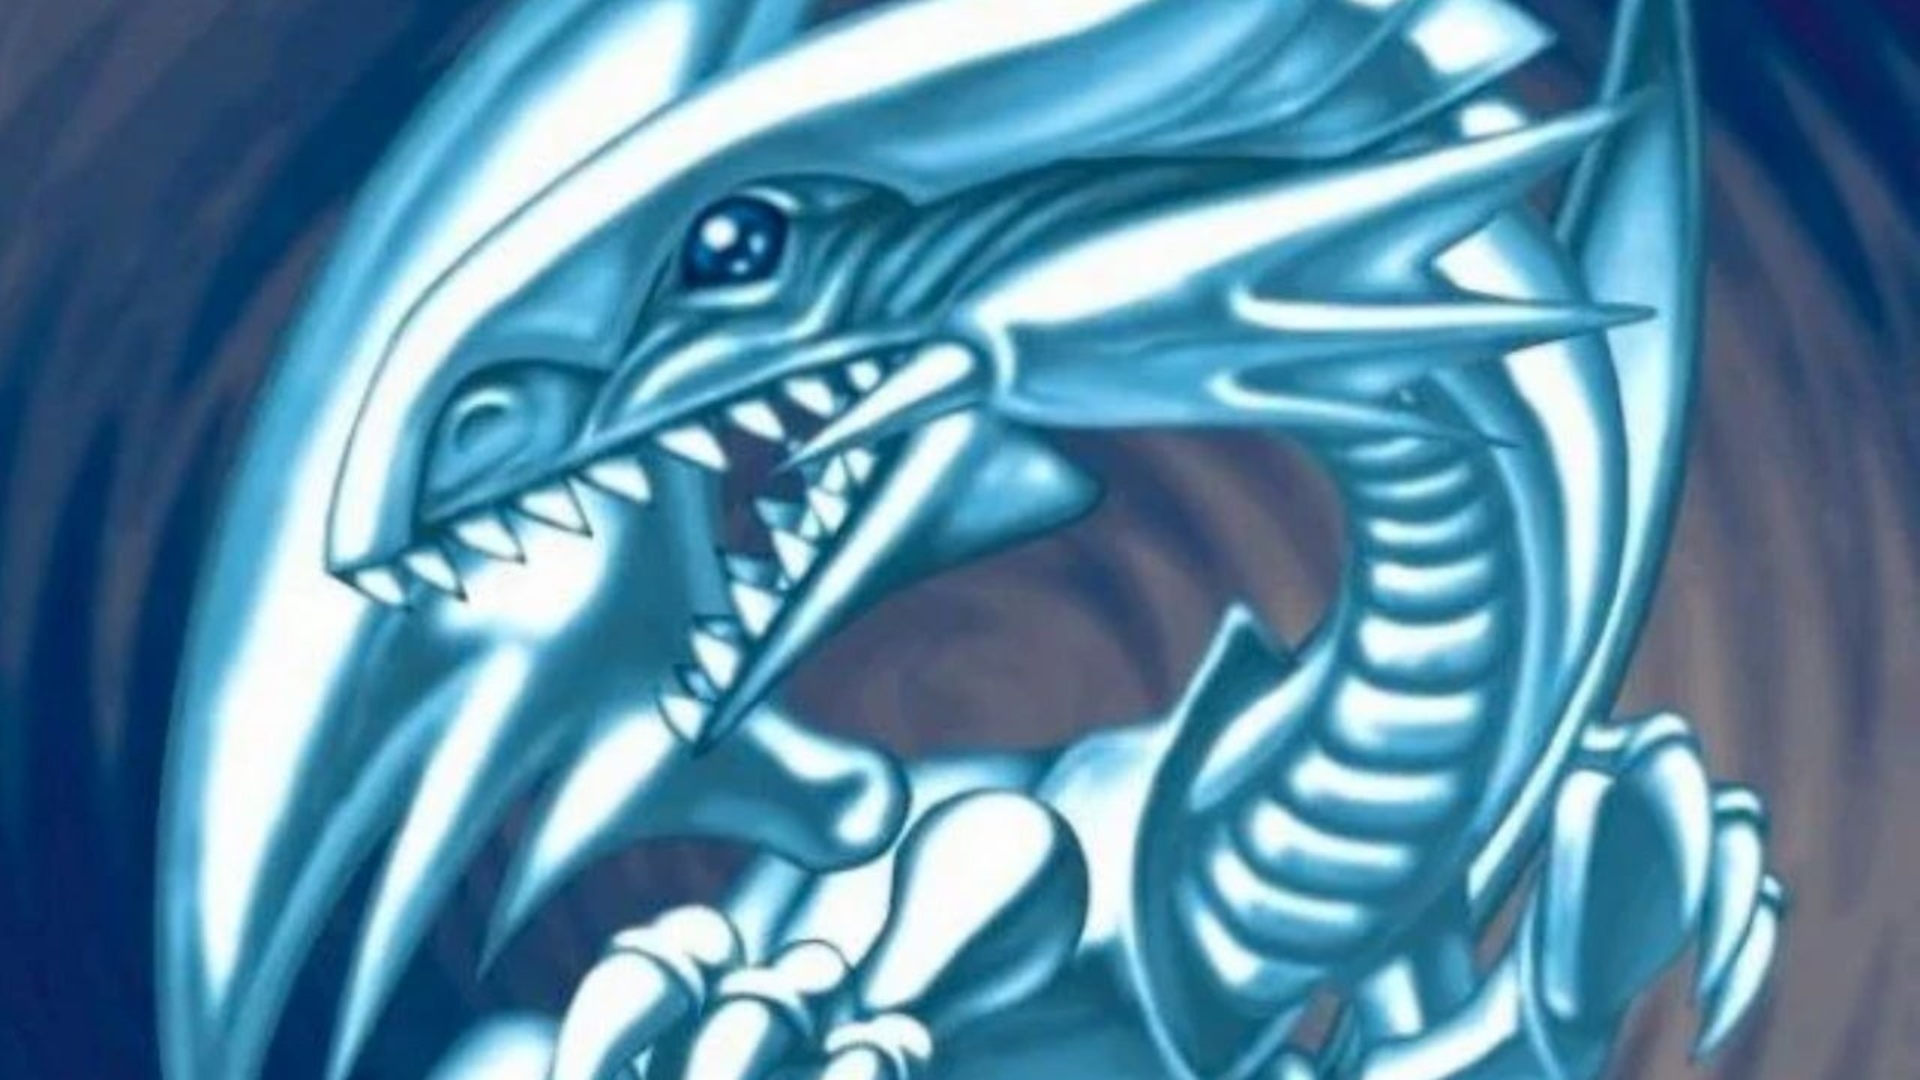 yugioh legendary dragons wallpaper